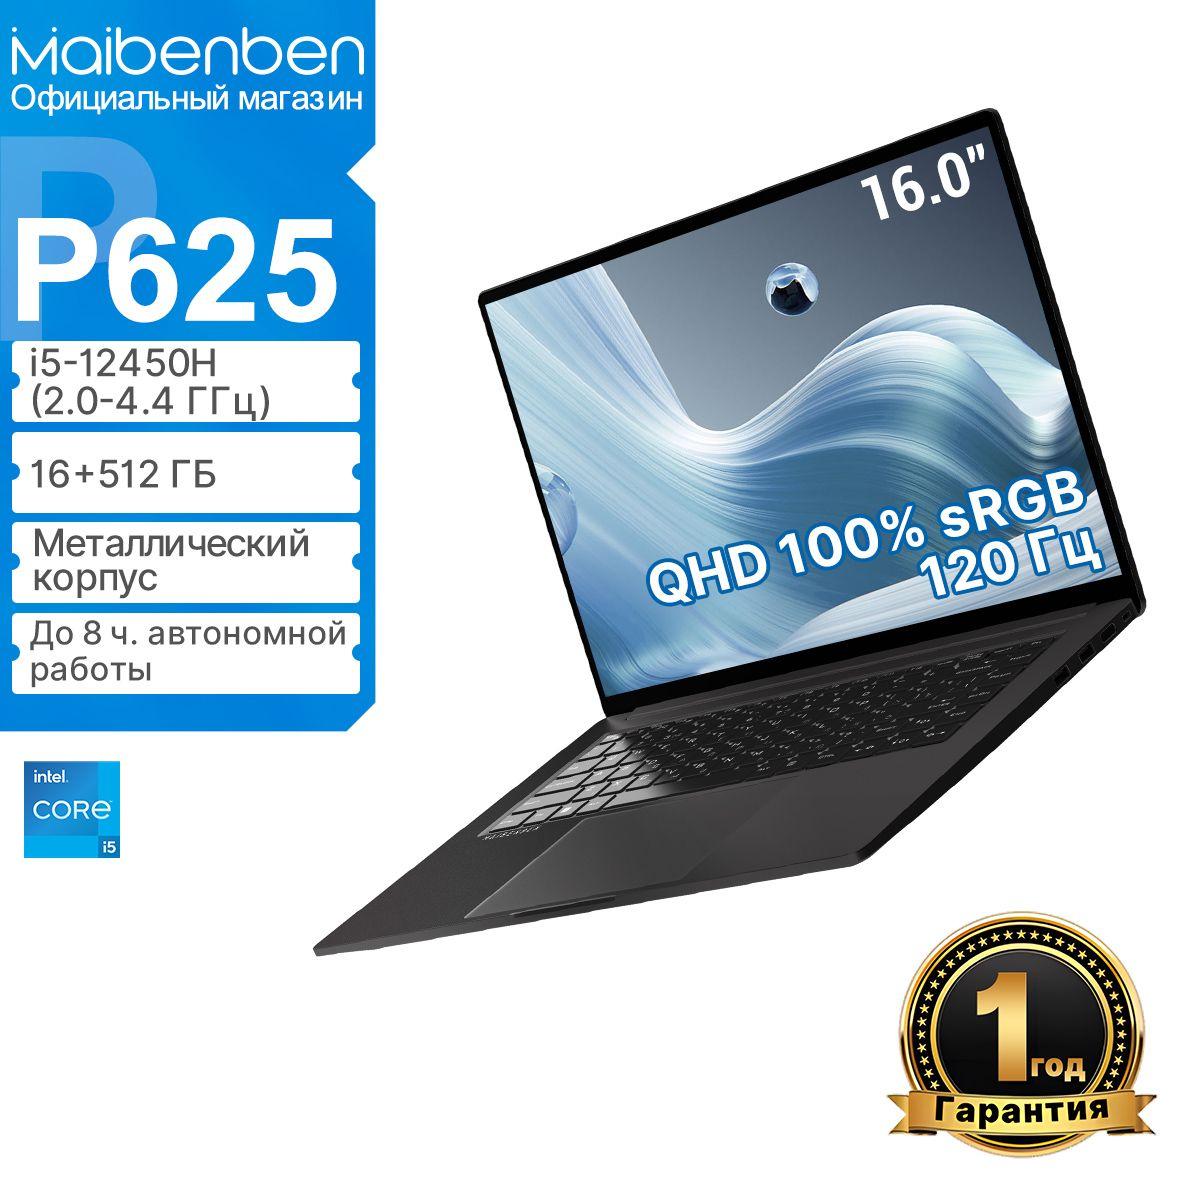 MAIBENBEN P625 QHD(2560*1600) IPS 120Hz 100%sRGB Ноутбук 16", Intel Core i5-12450H, RAM 16 ГБ, SSD 512 ГБ, Intel UHD Graphics, Linux, черно-серый, Русская раскладка